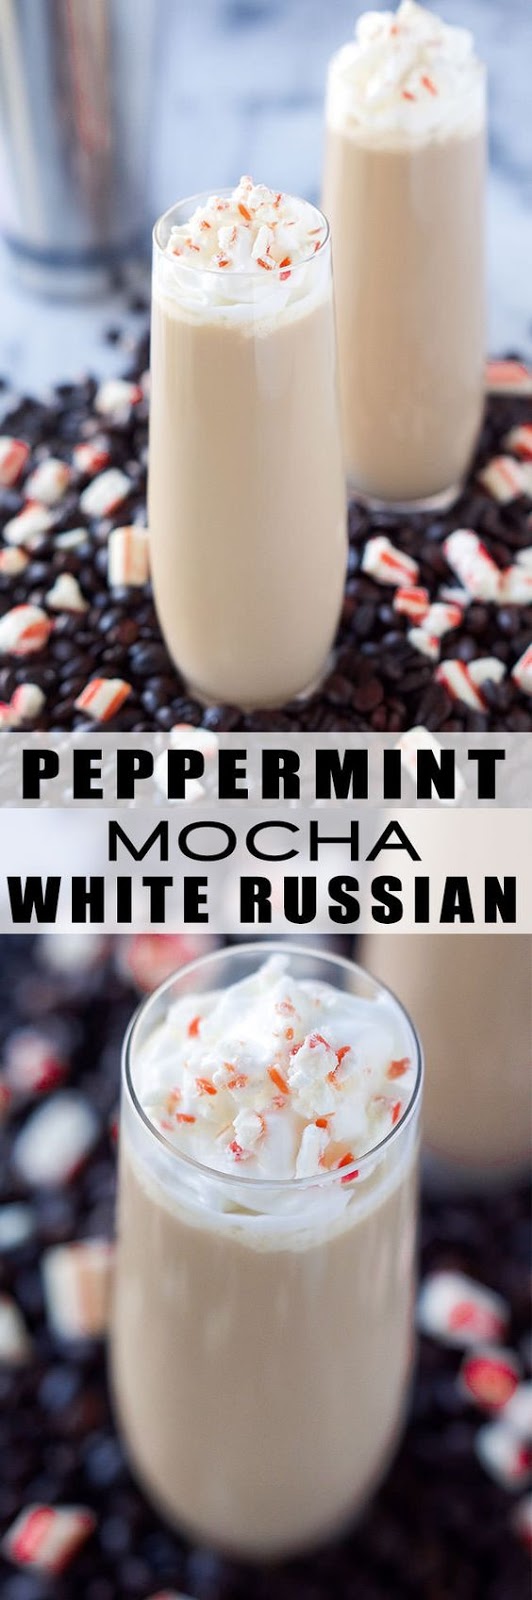 Peppermint Mocha White Russian - My Kitchen Recipes